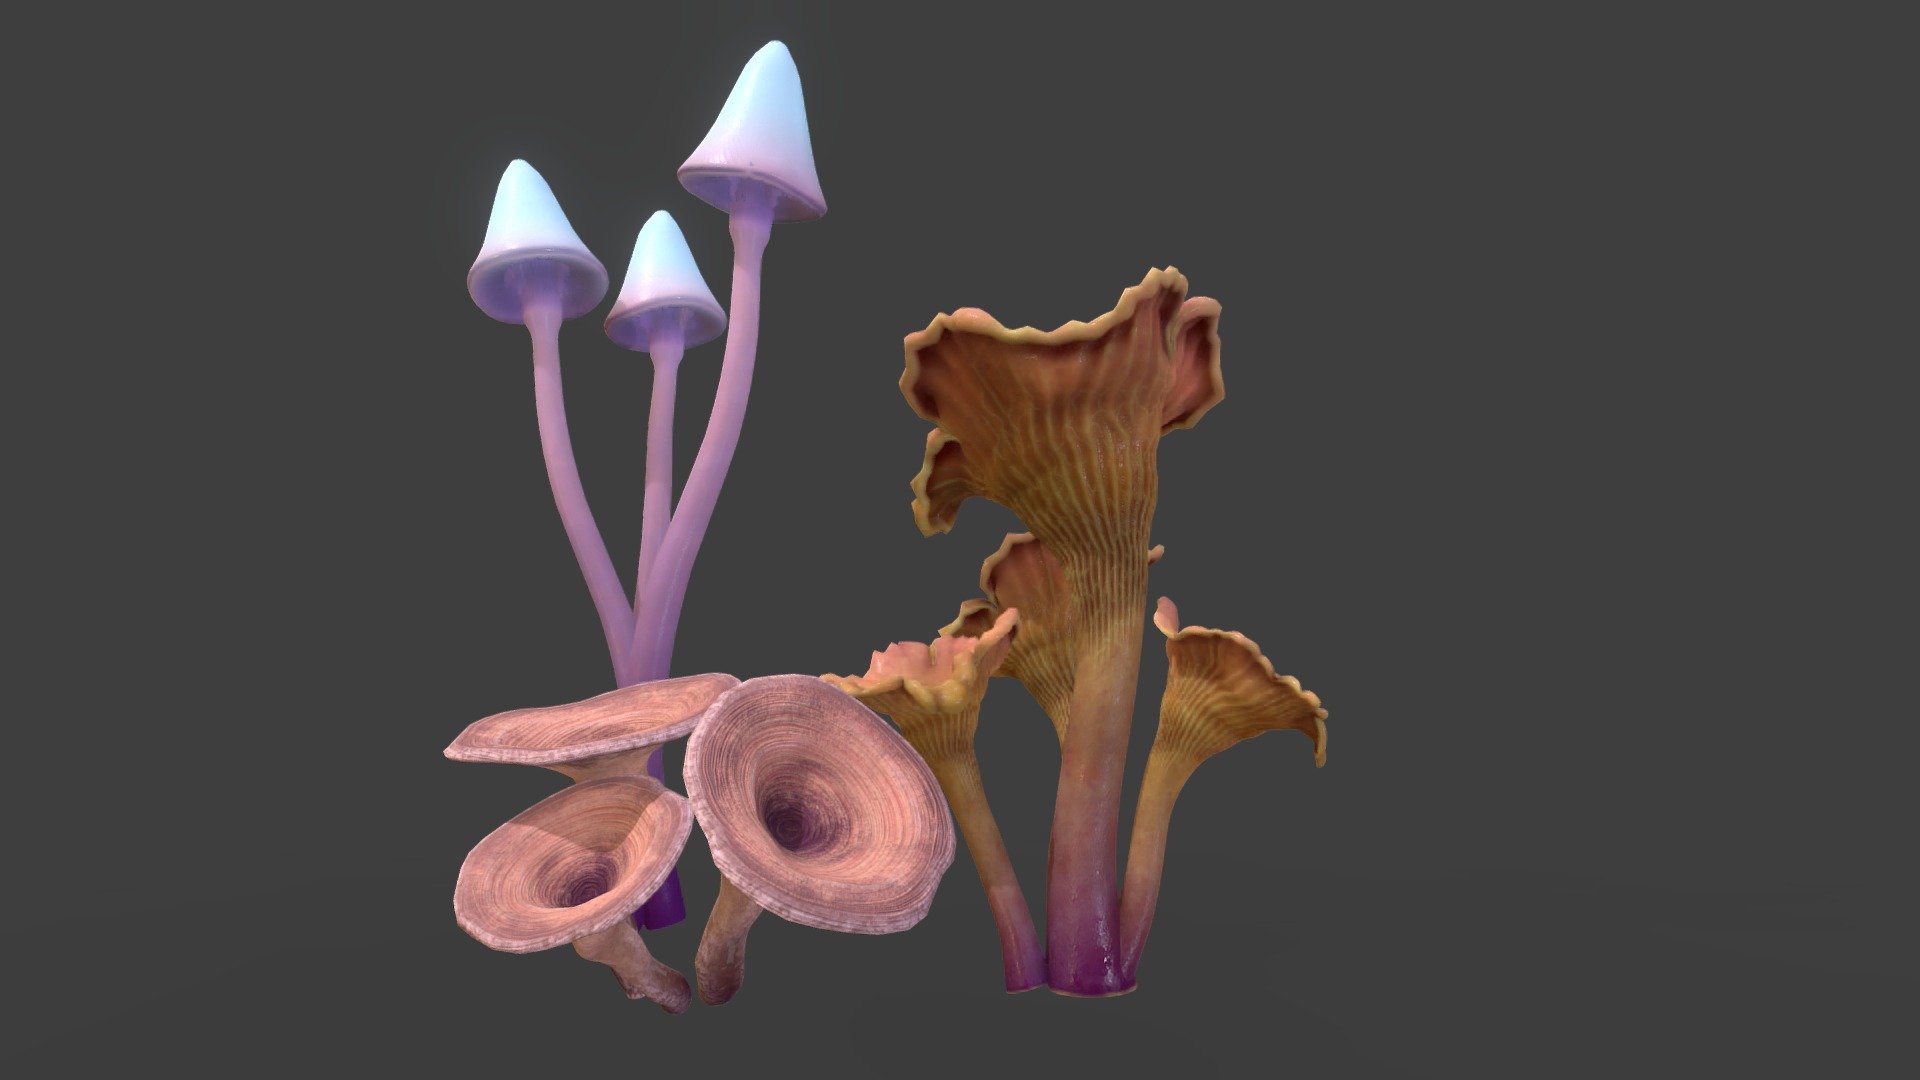 Three fantasy mushroms i made for my scene for CGboost.com challenge - mushroom house. Image can be seen on my Artstation here: https://www.artstation.com/artwork/mDW1P9 - Mushrooms Collection - Download Free 3D model by Duffator 3d model